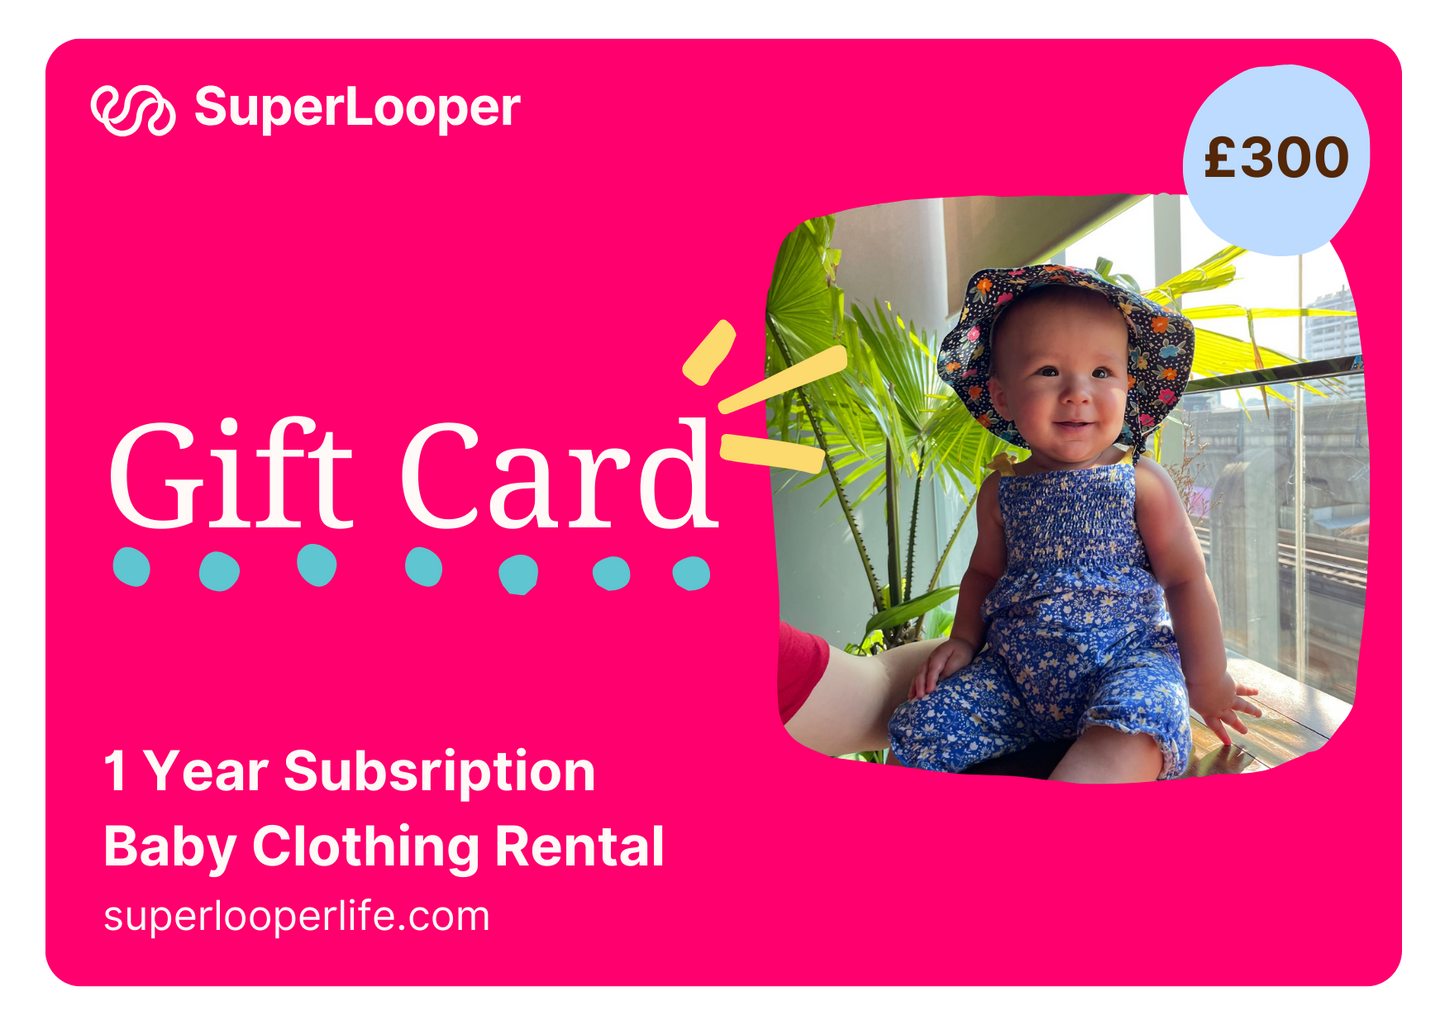 Superlooper gift card